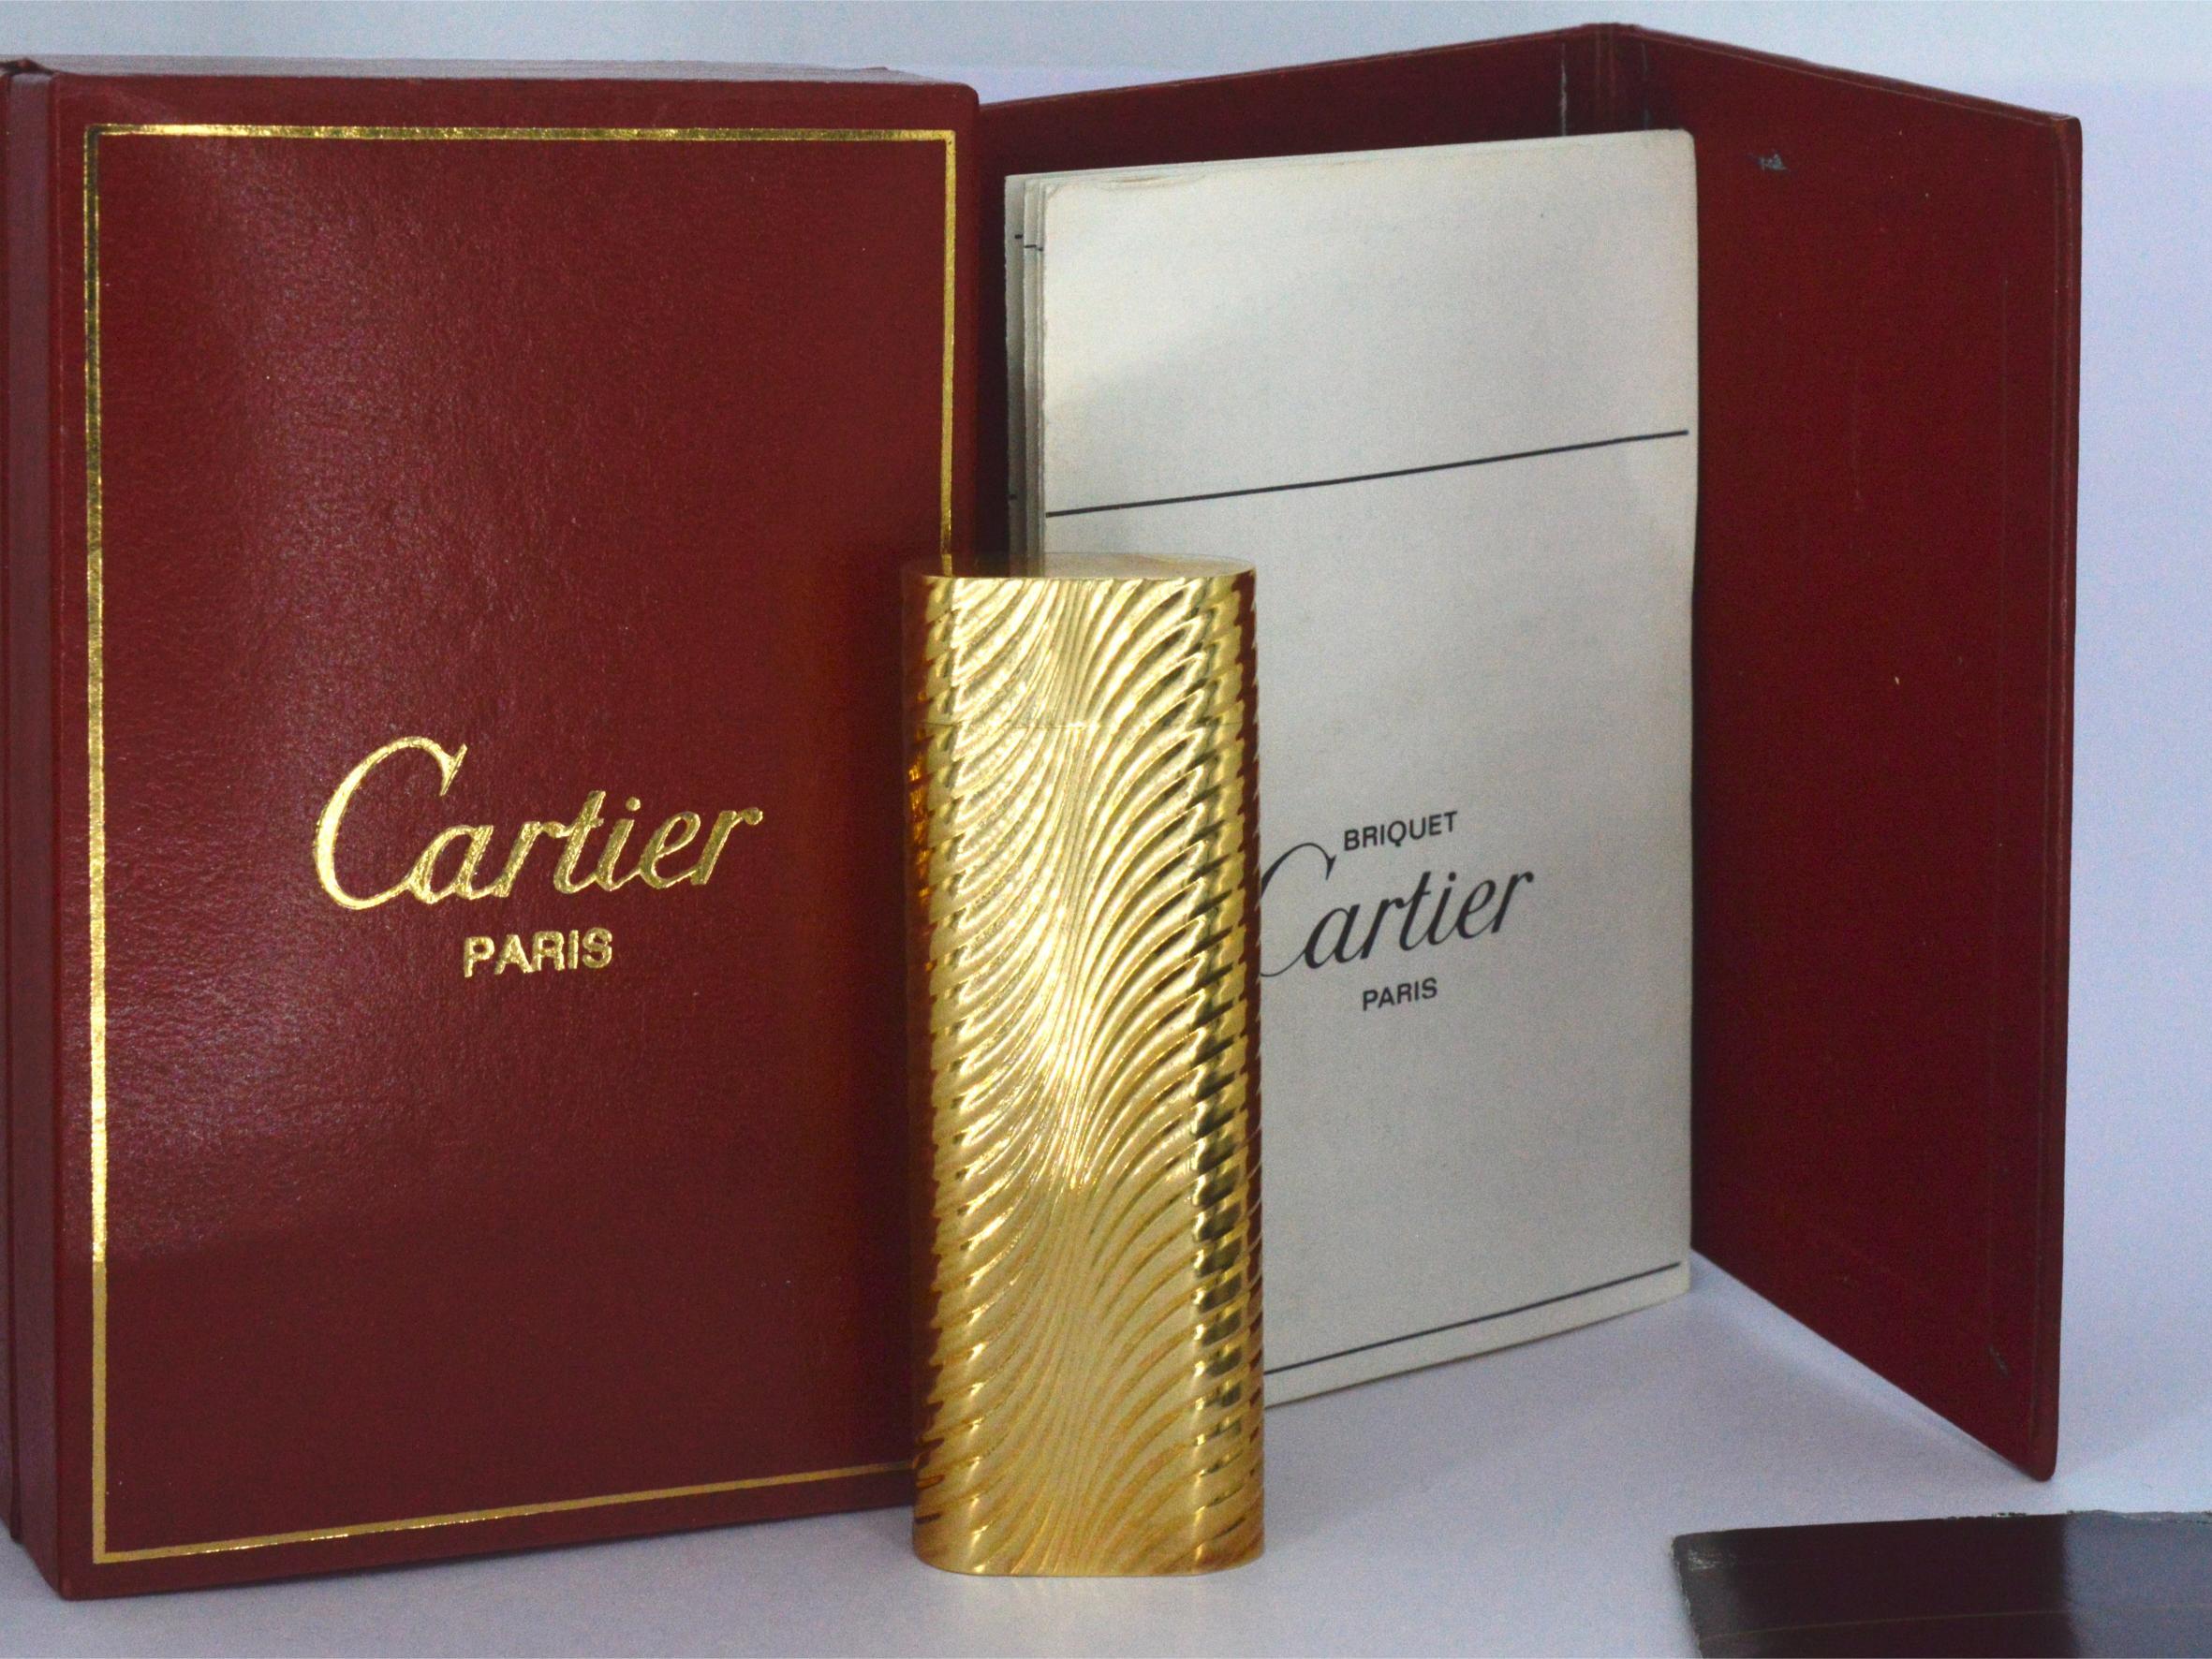 Cartier Paris lighter in original box 1